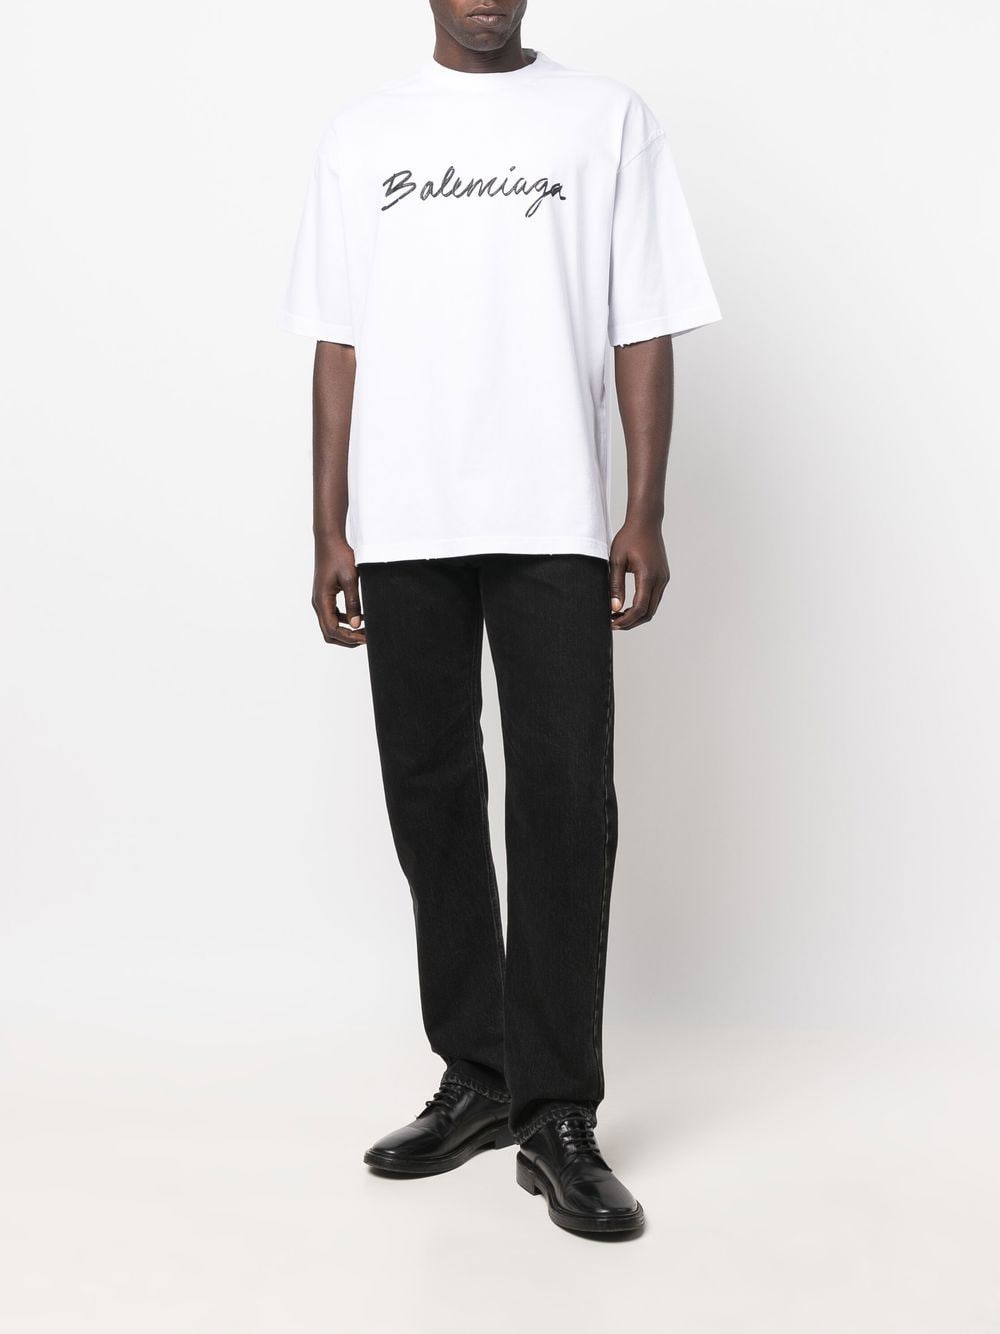 Cotton Printed Balenciaga T-Shirt for Men - White - KDB Deals